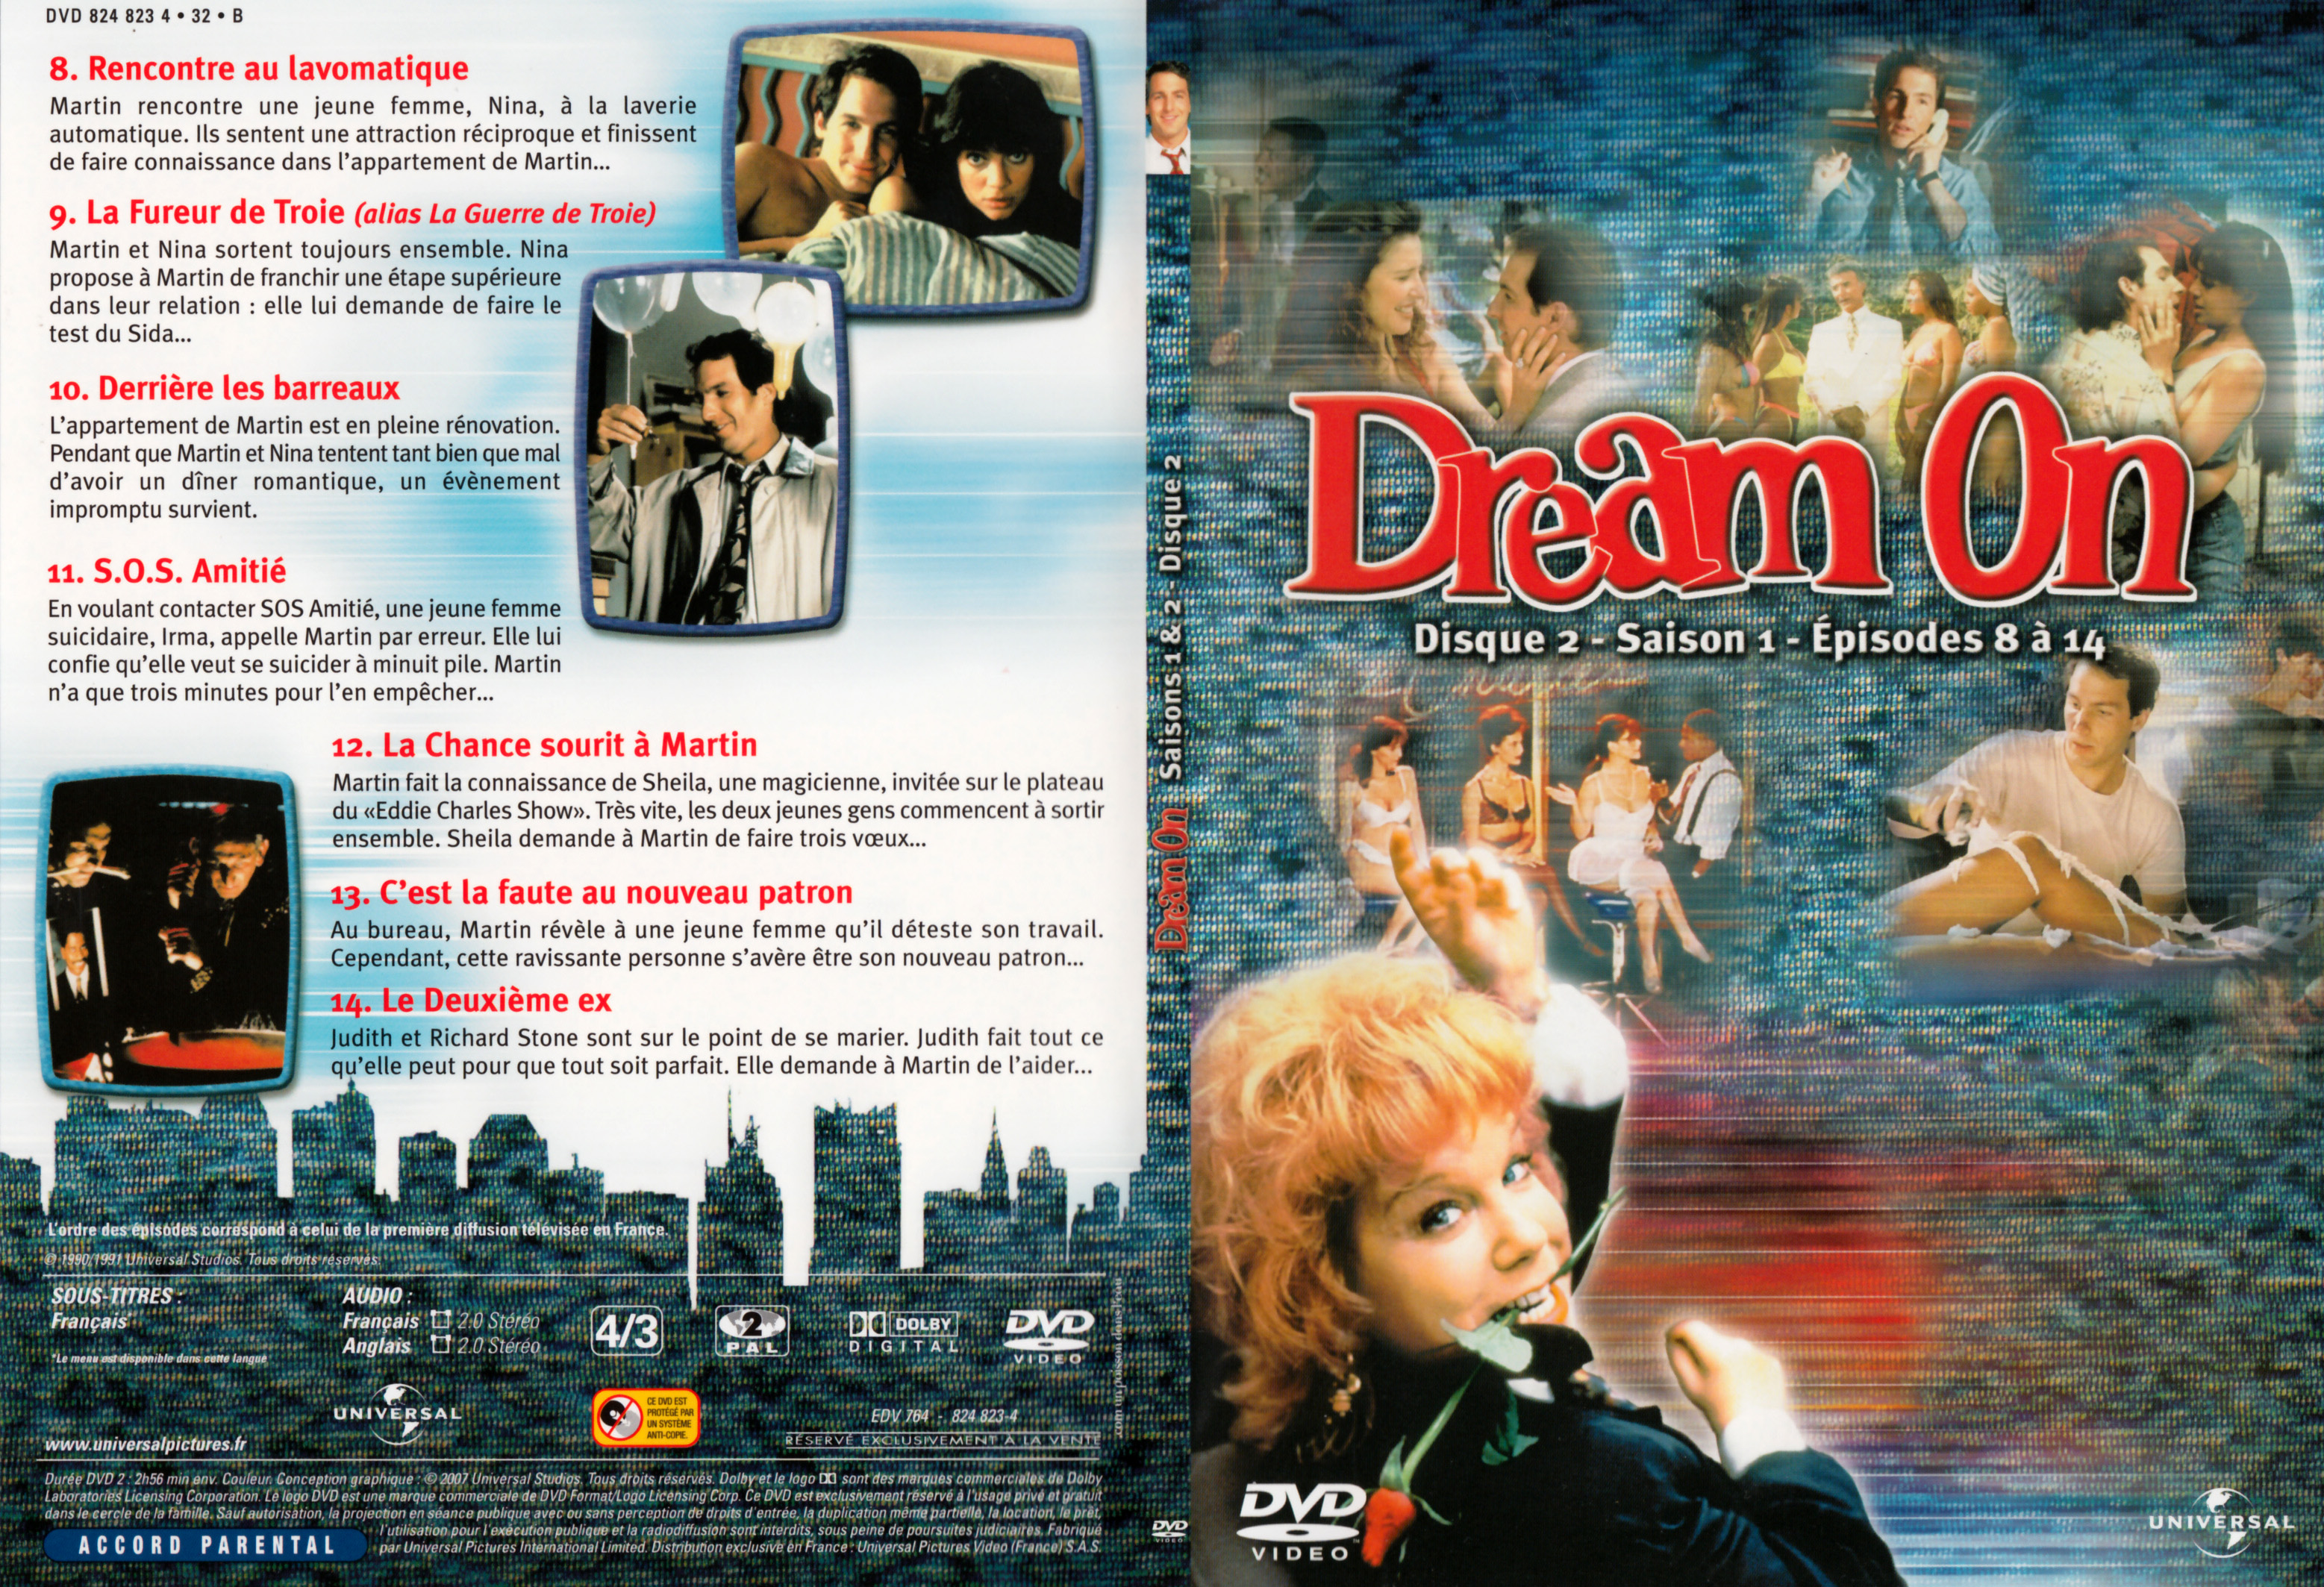 Jaquette DVD Dream on Saison 1 DVD 2